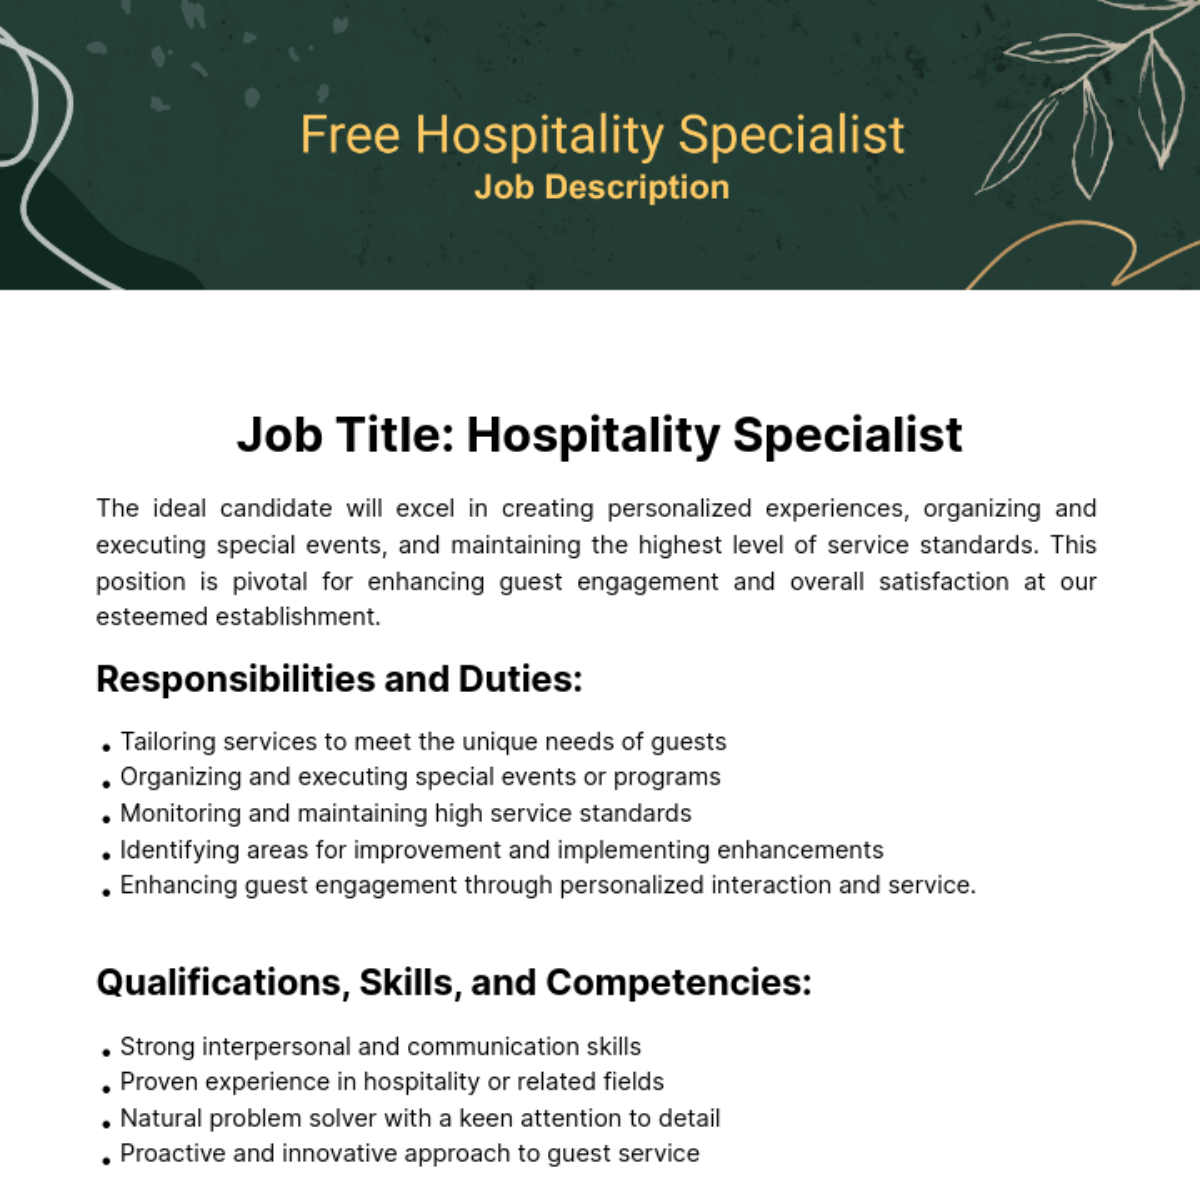 Free Hospitality Specialist Job Description Template